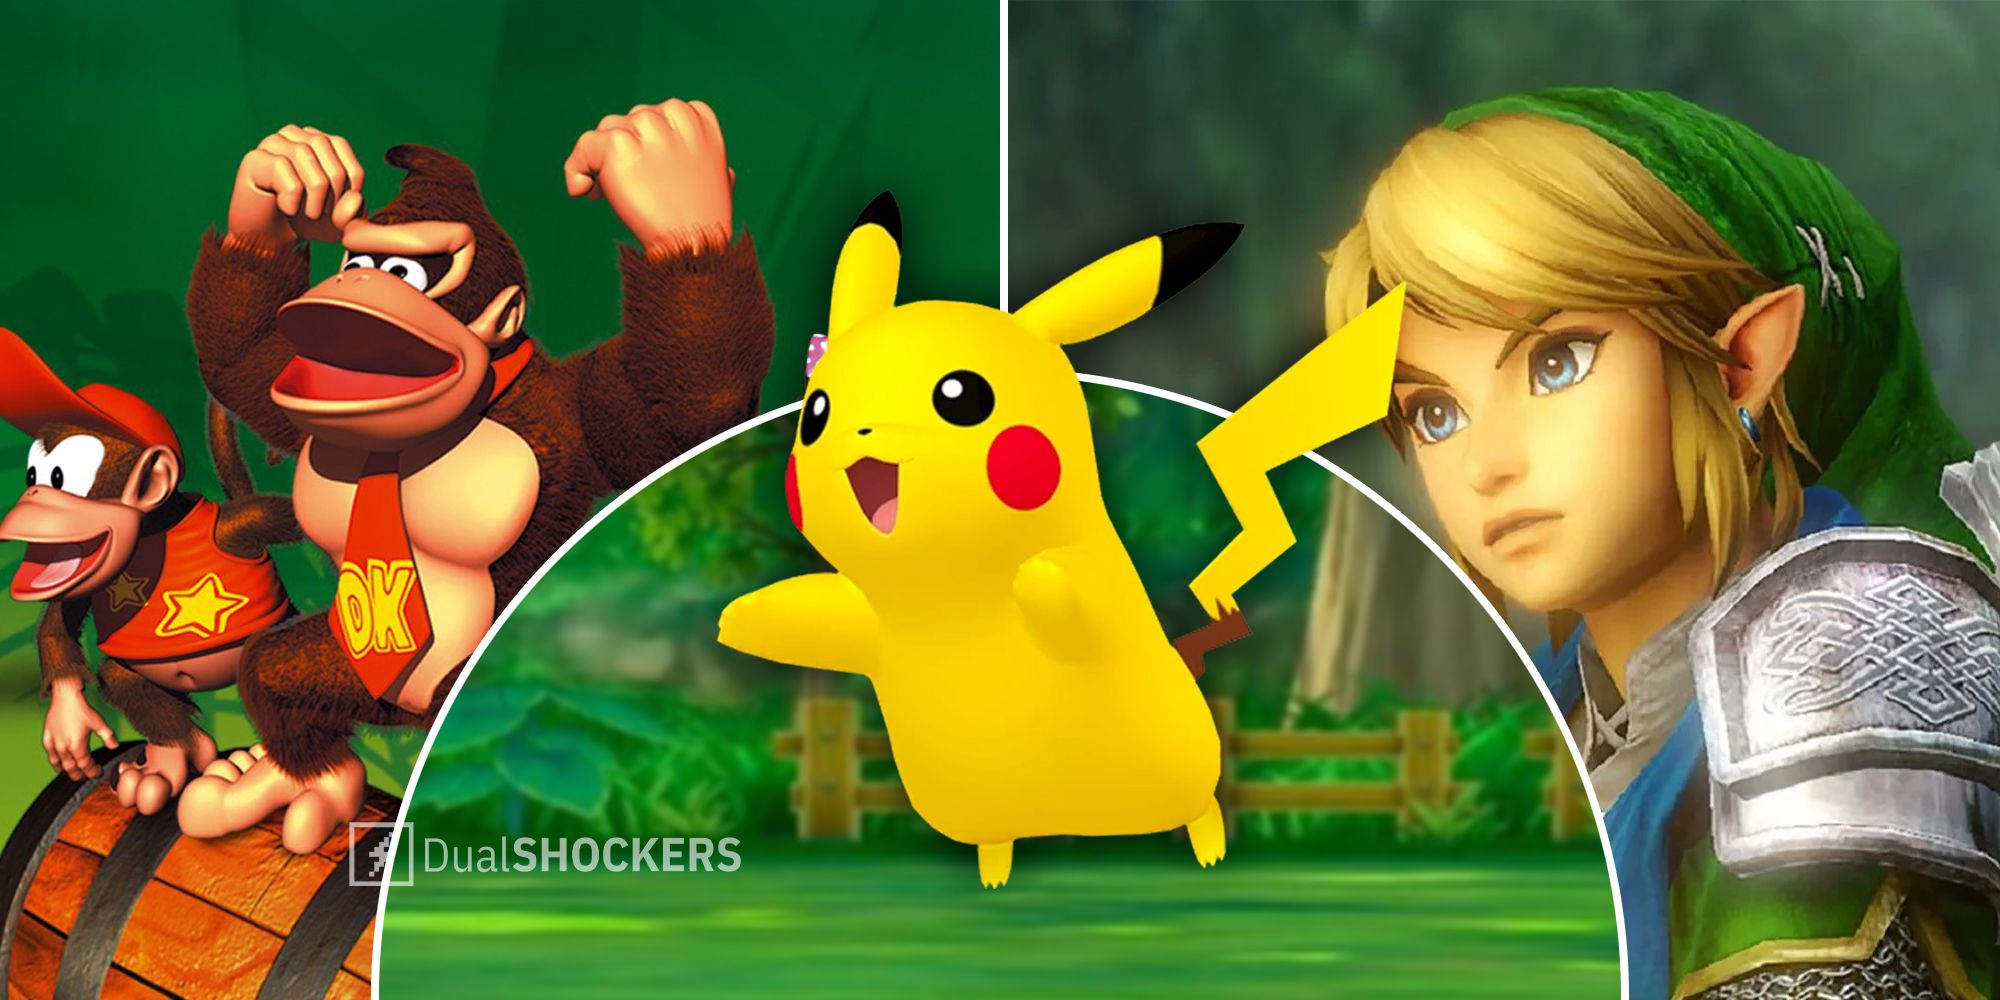 Donkey Kong, Pikachu, Link characters